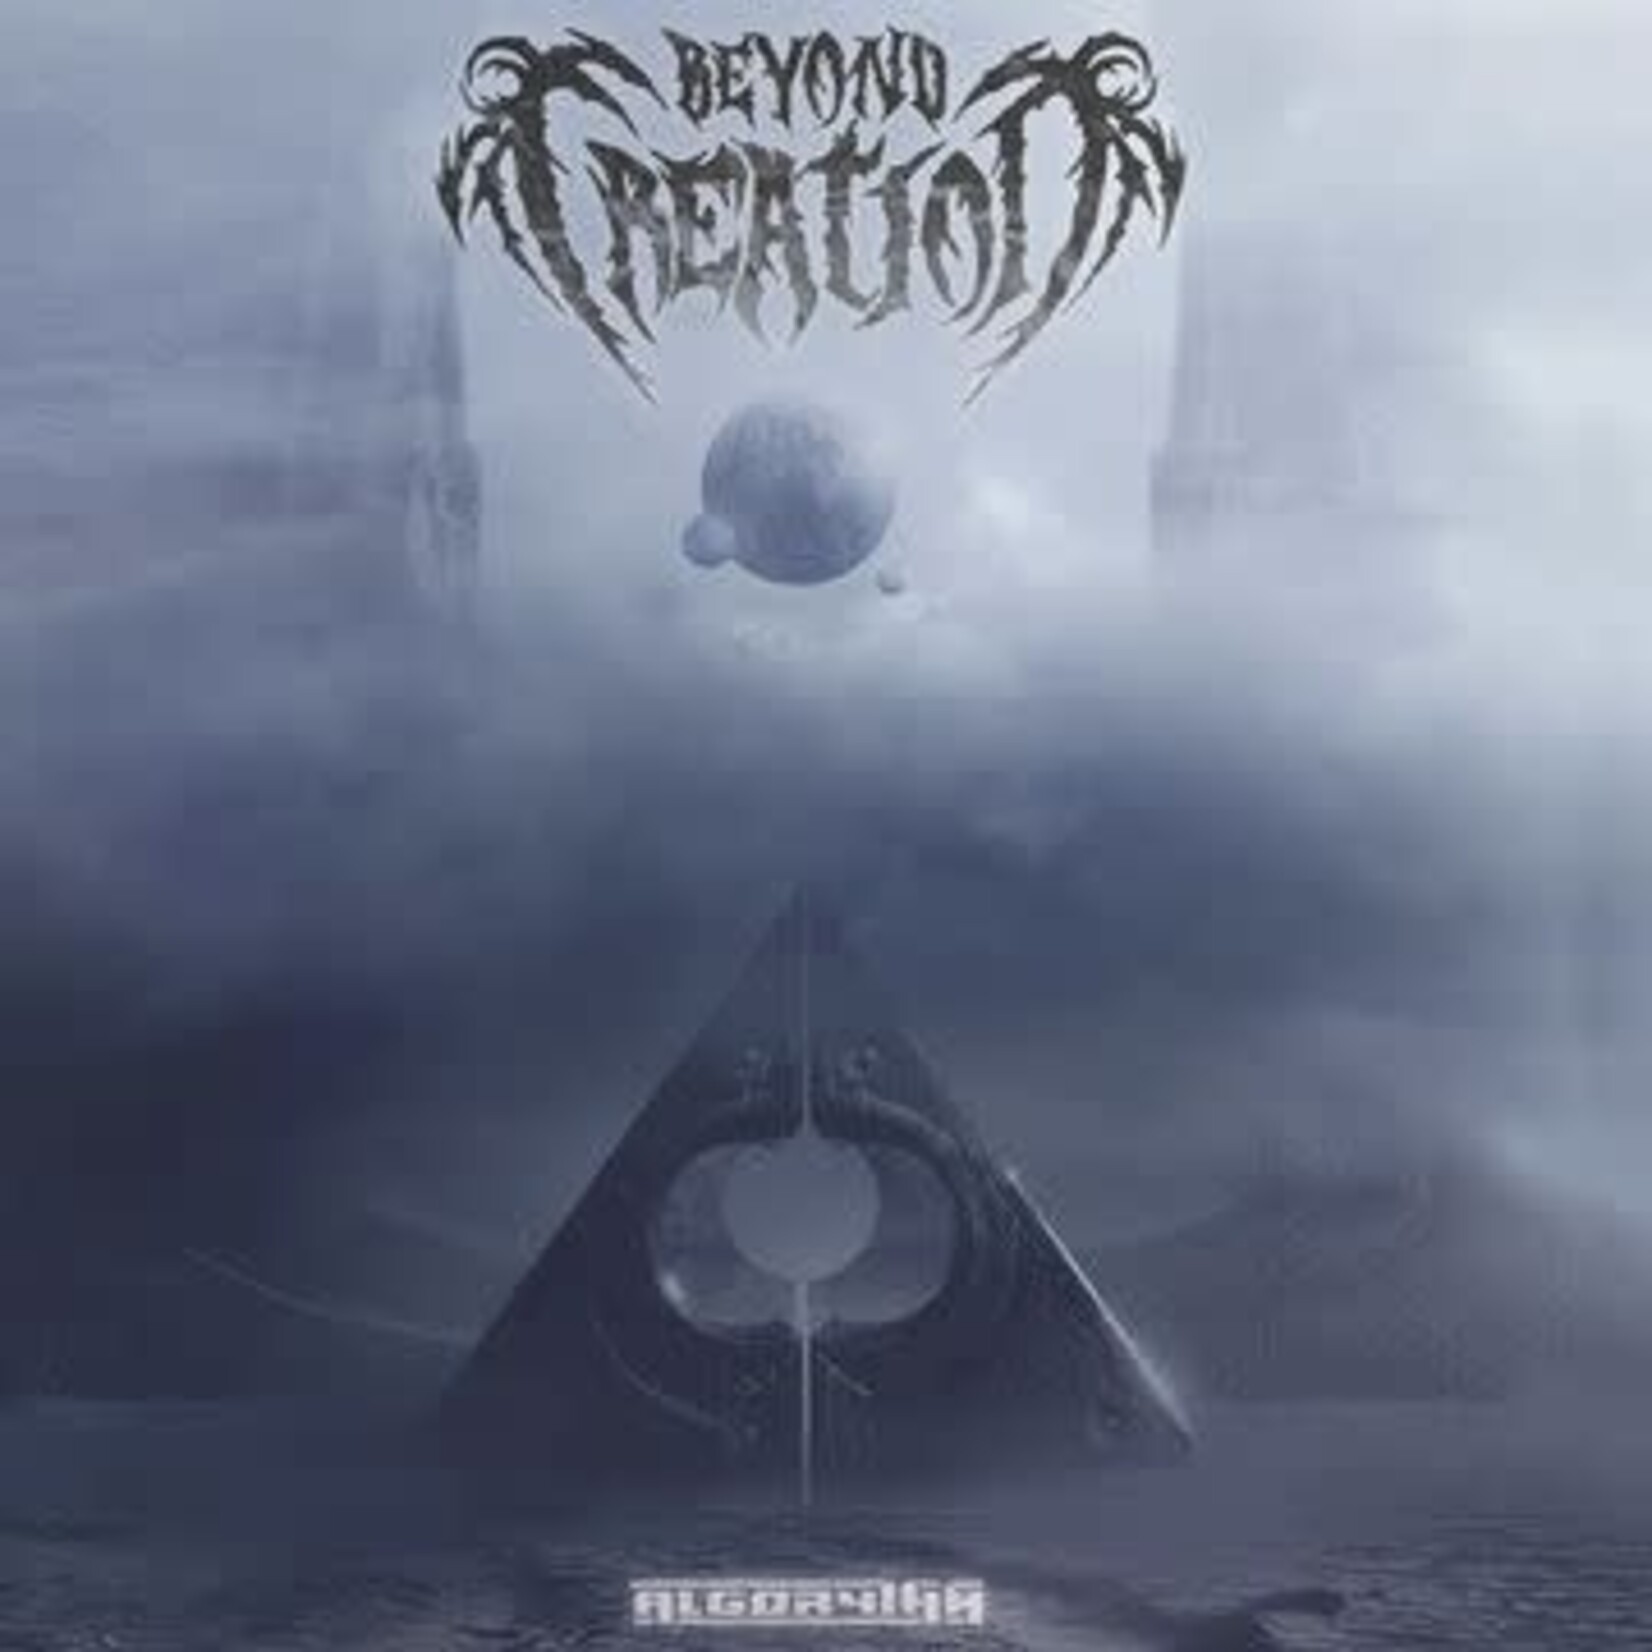 Beyond Creation - Algorythm [CD]